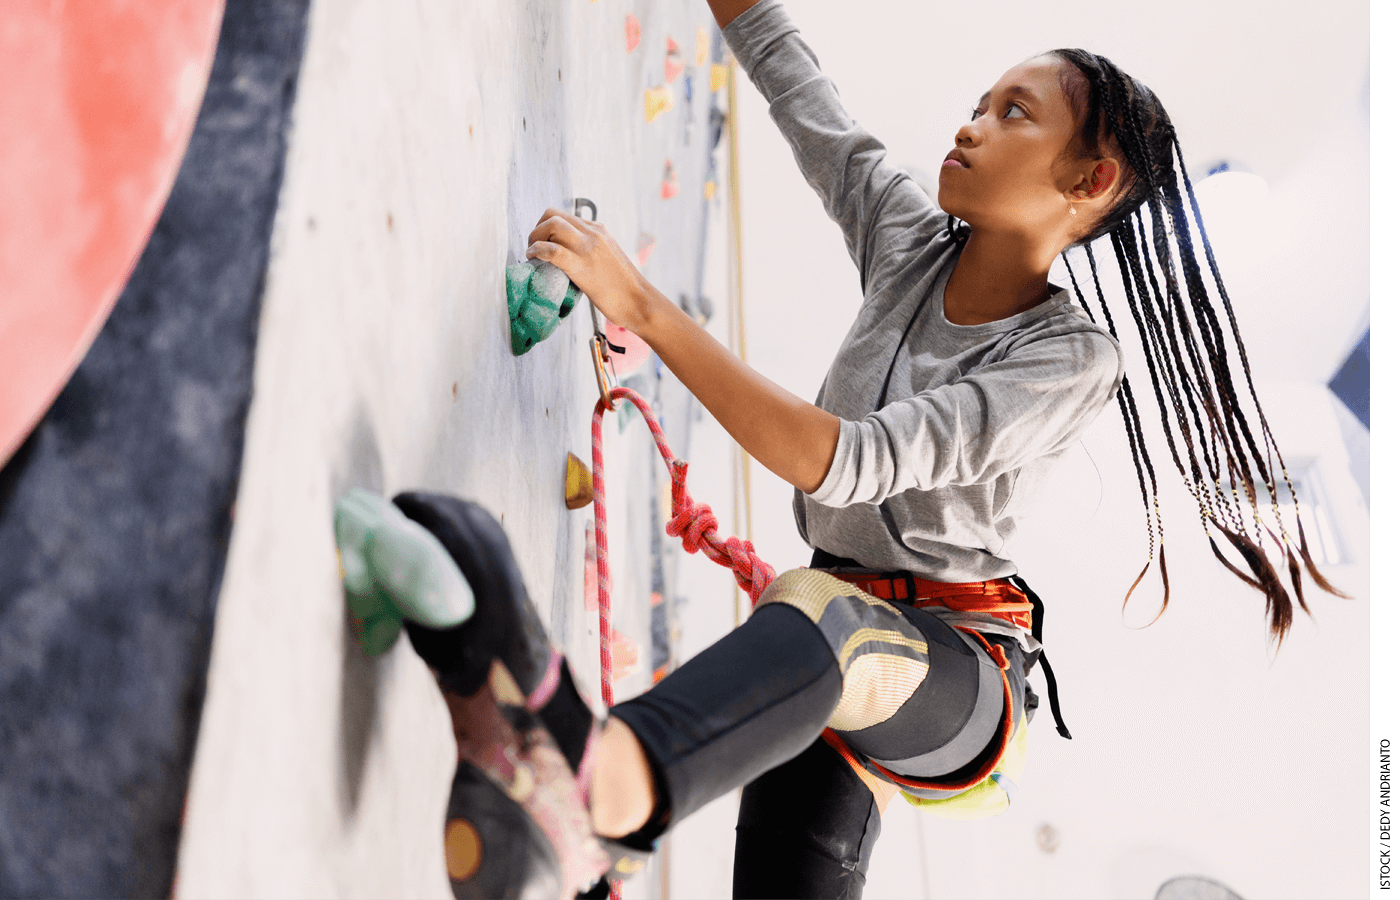 A girl climbs a rock wall